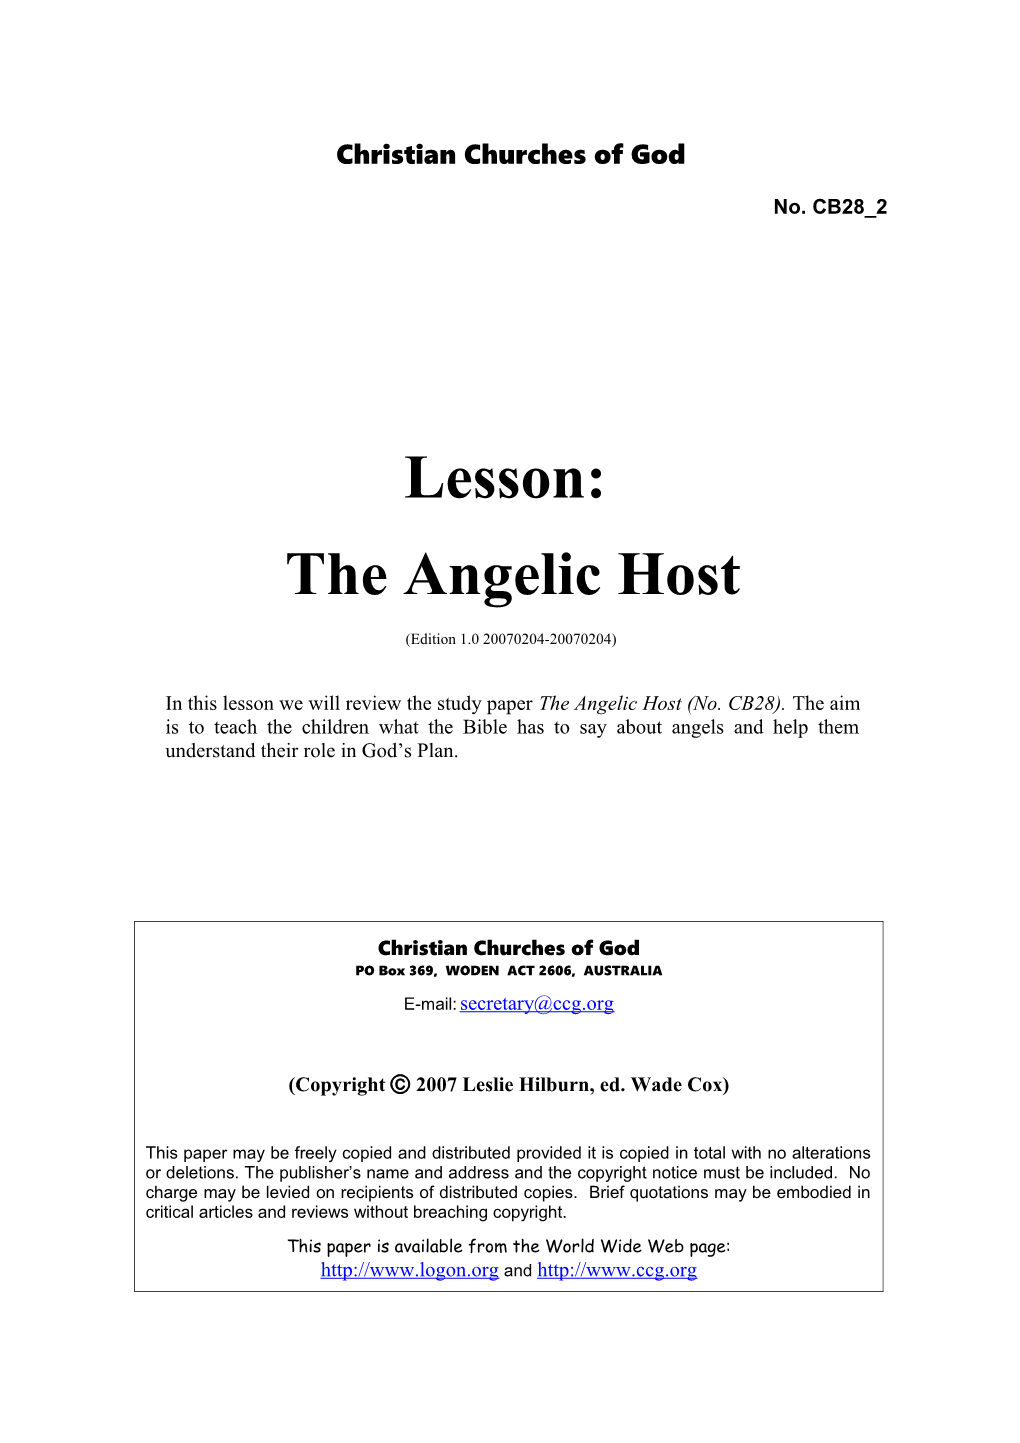 Lesson: the Angelic Host (No. CB28 2)